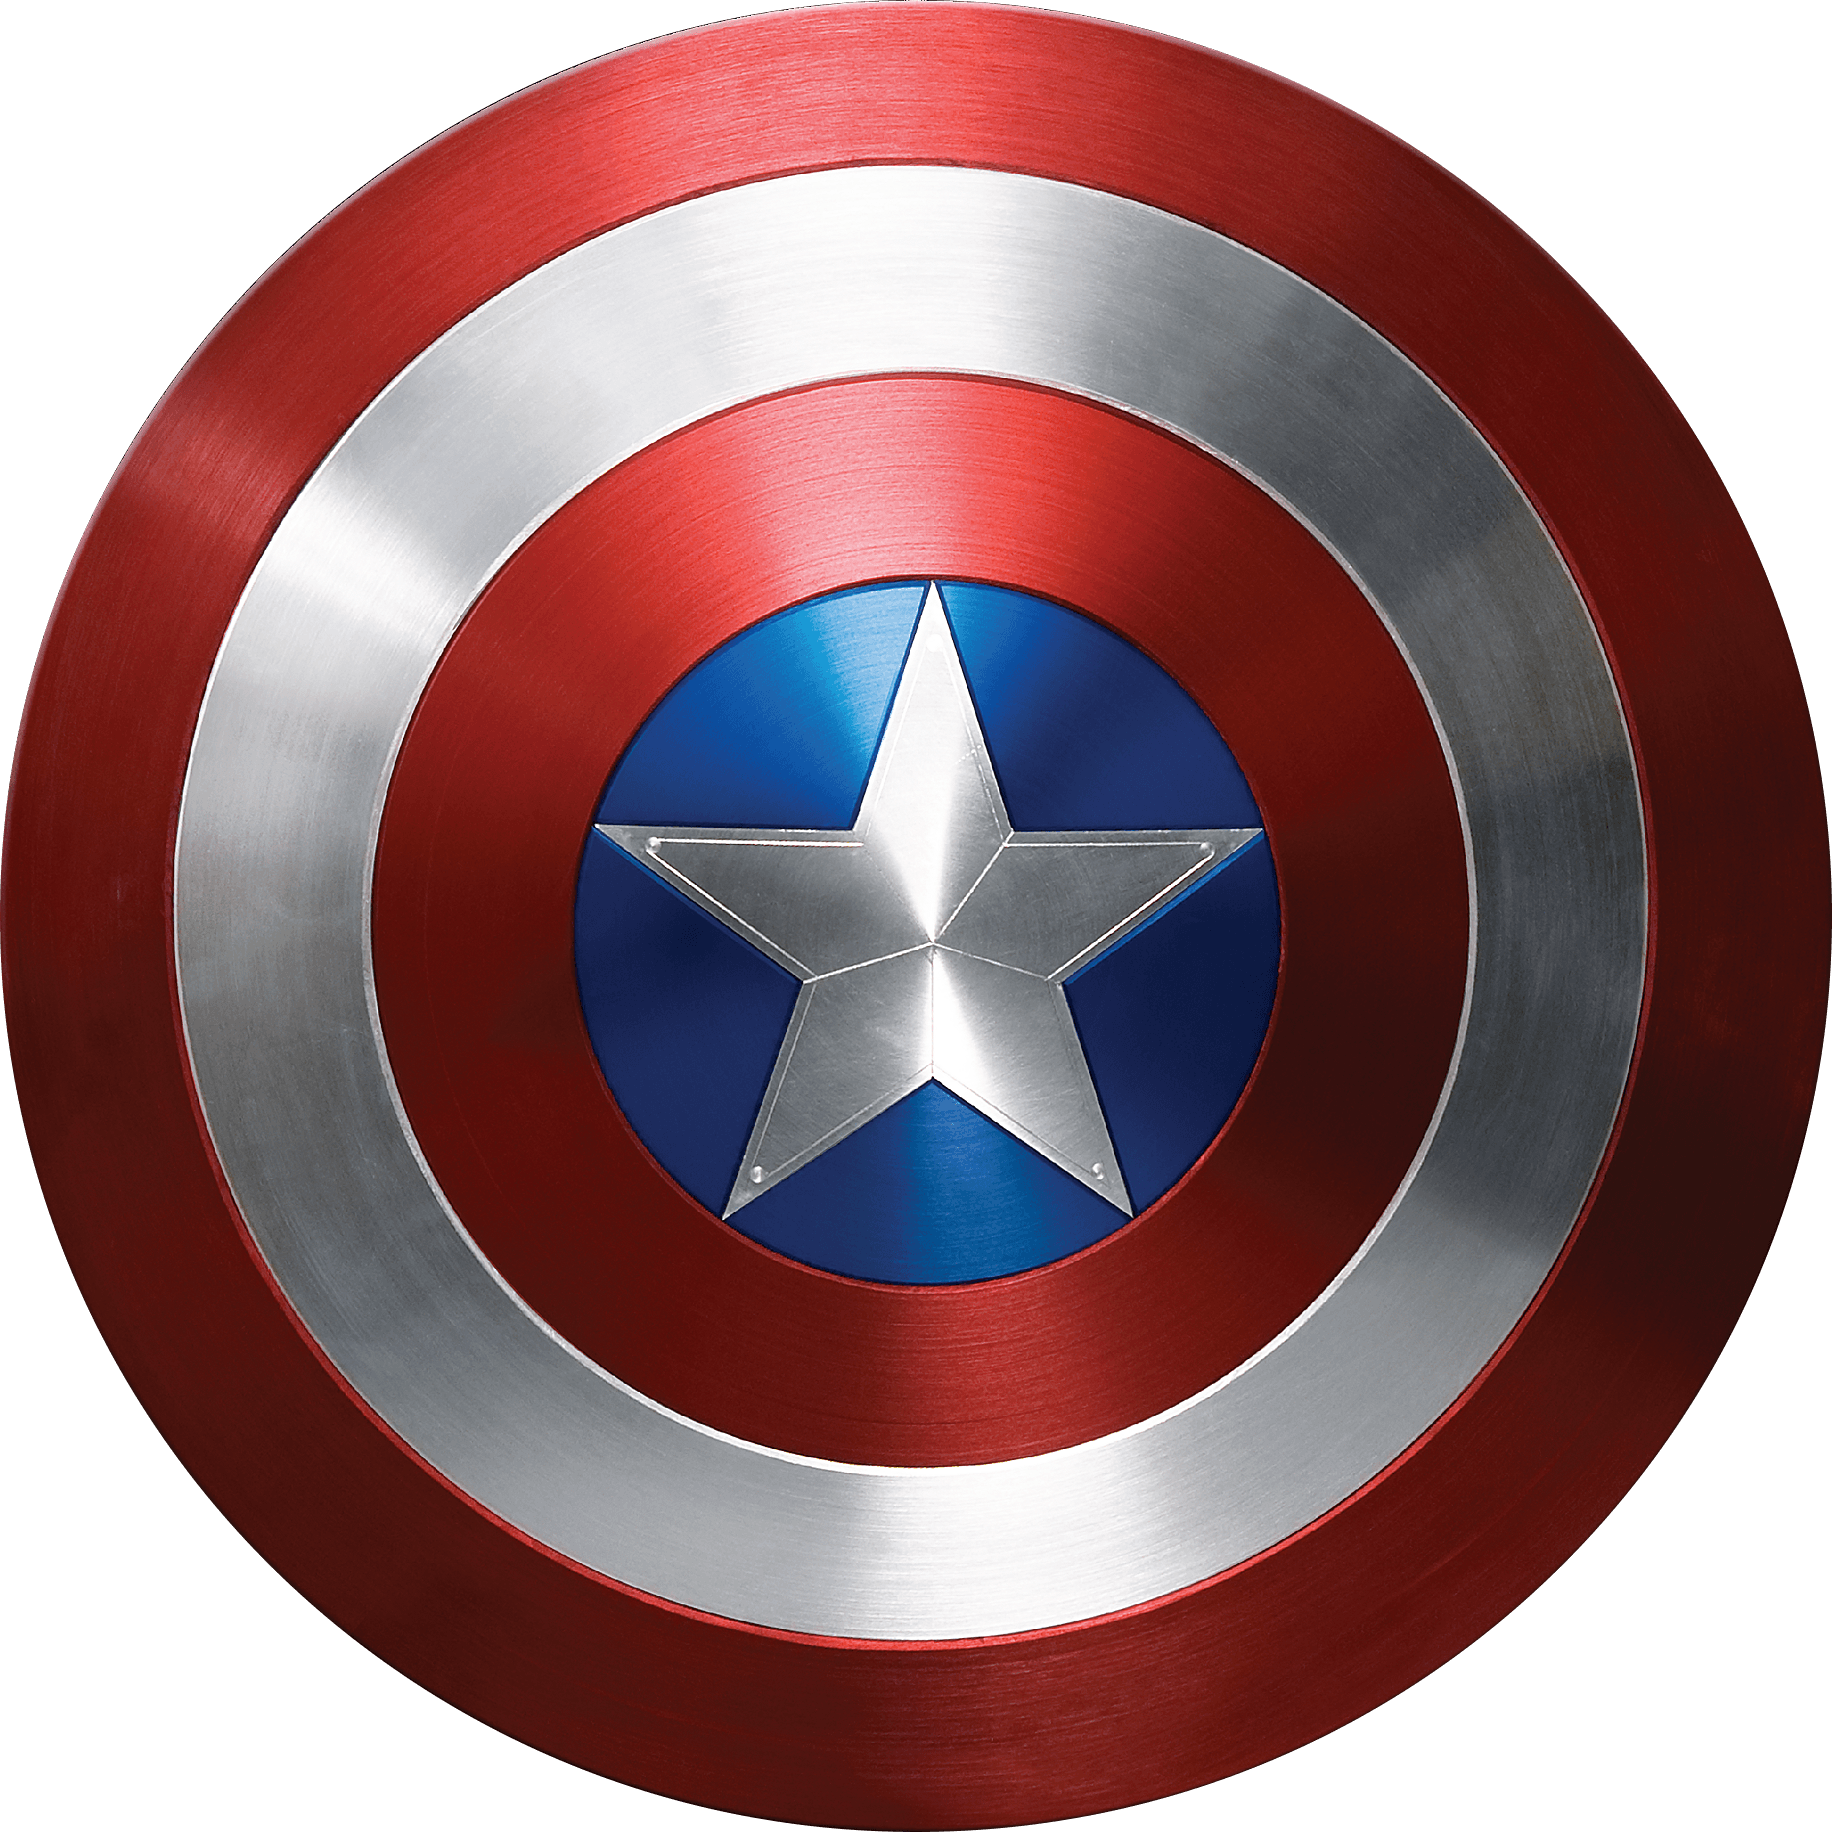 Captain America Shield Logo - Captain America's Shield. Marvel Cinematic Universe